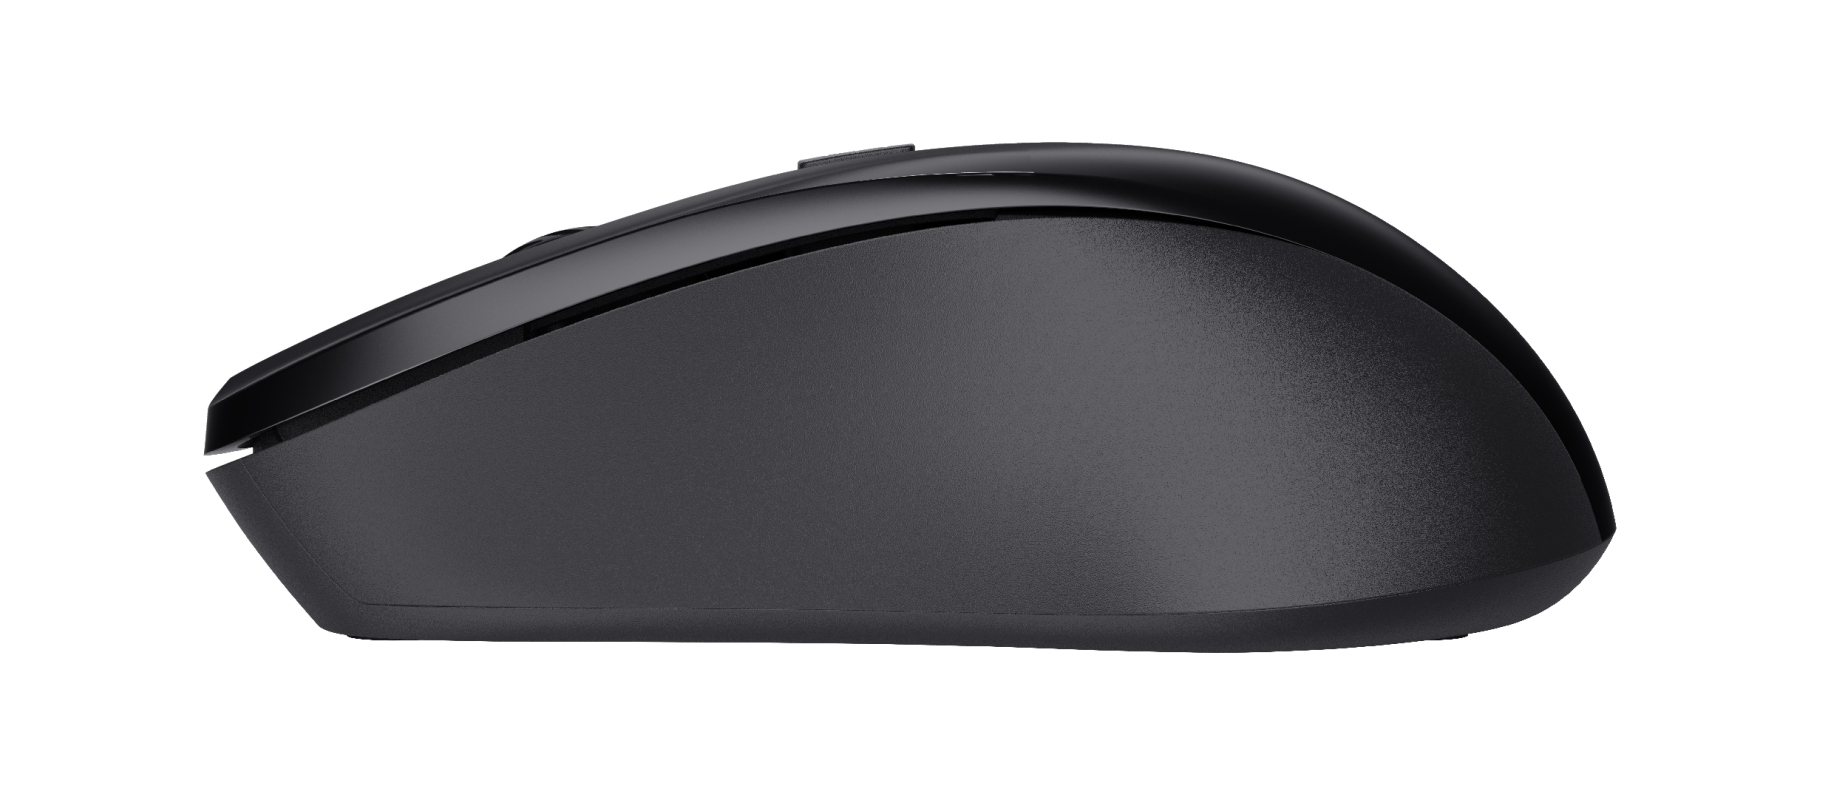 Mydo Silent Click Wireless Mouse - black-Side